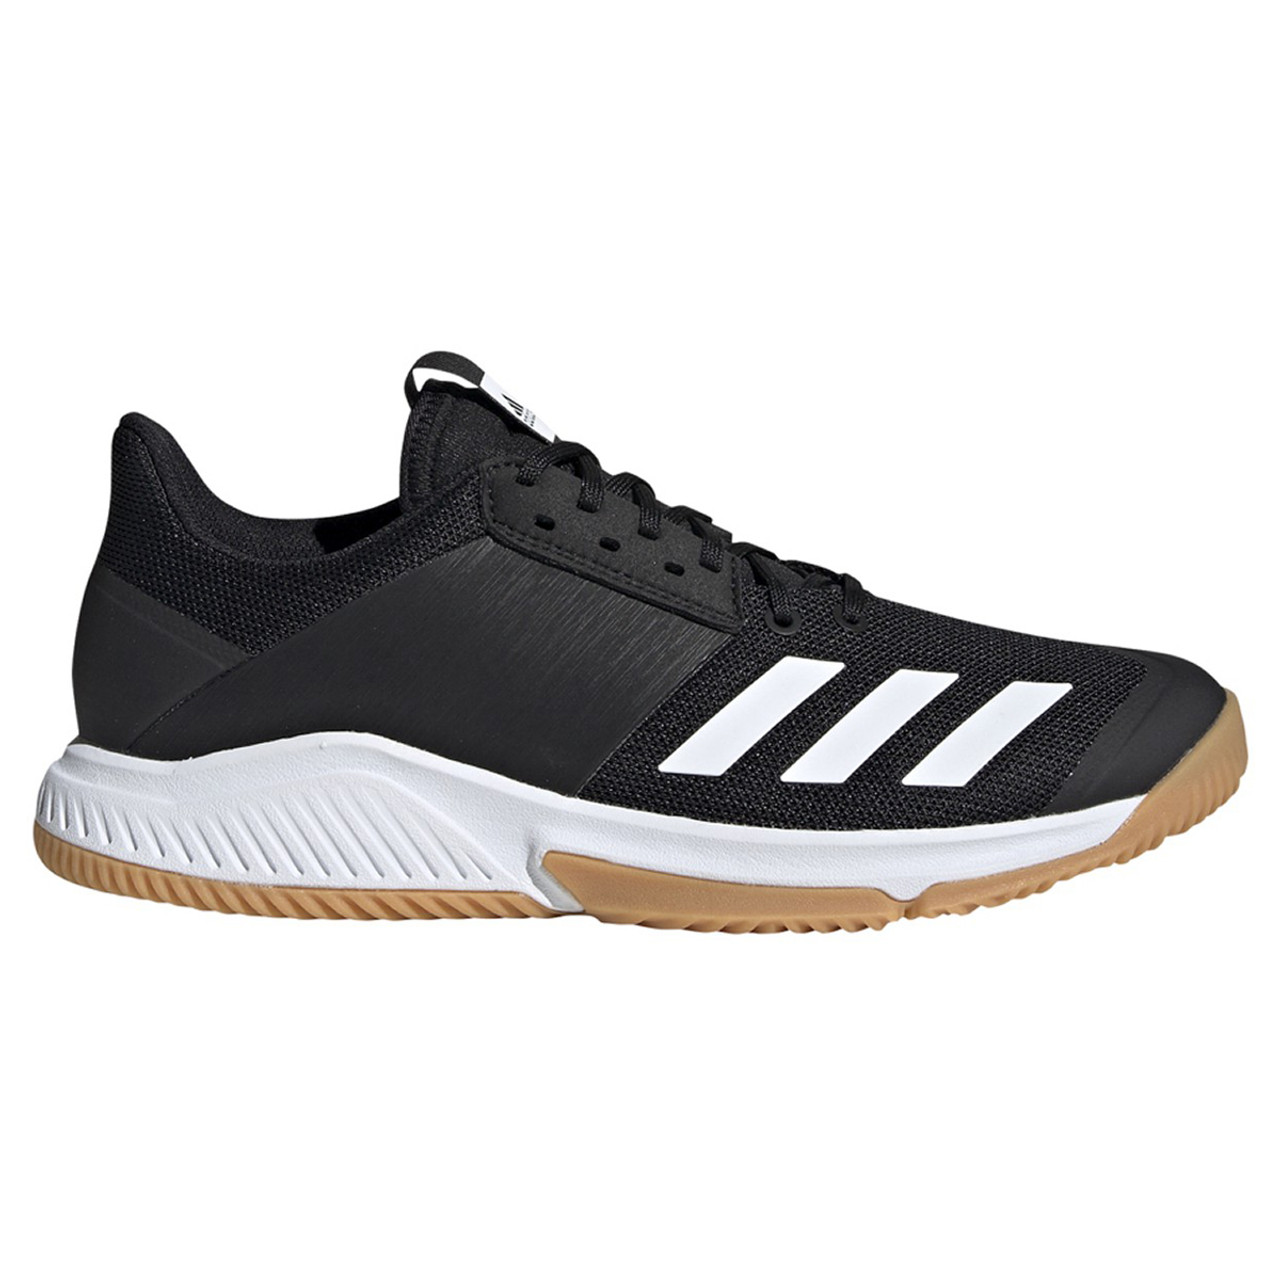 Adidas Crazyflight Team Women's Volleyball Shoes D97701 - Black, White, Gum